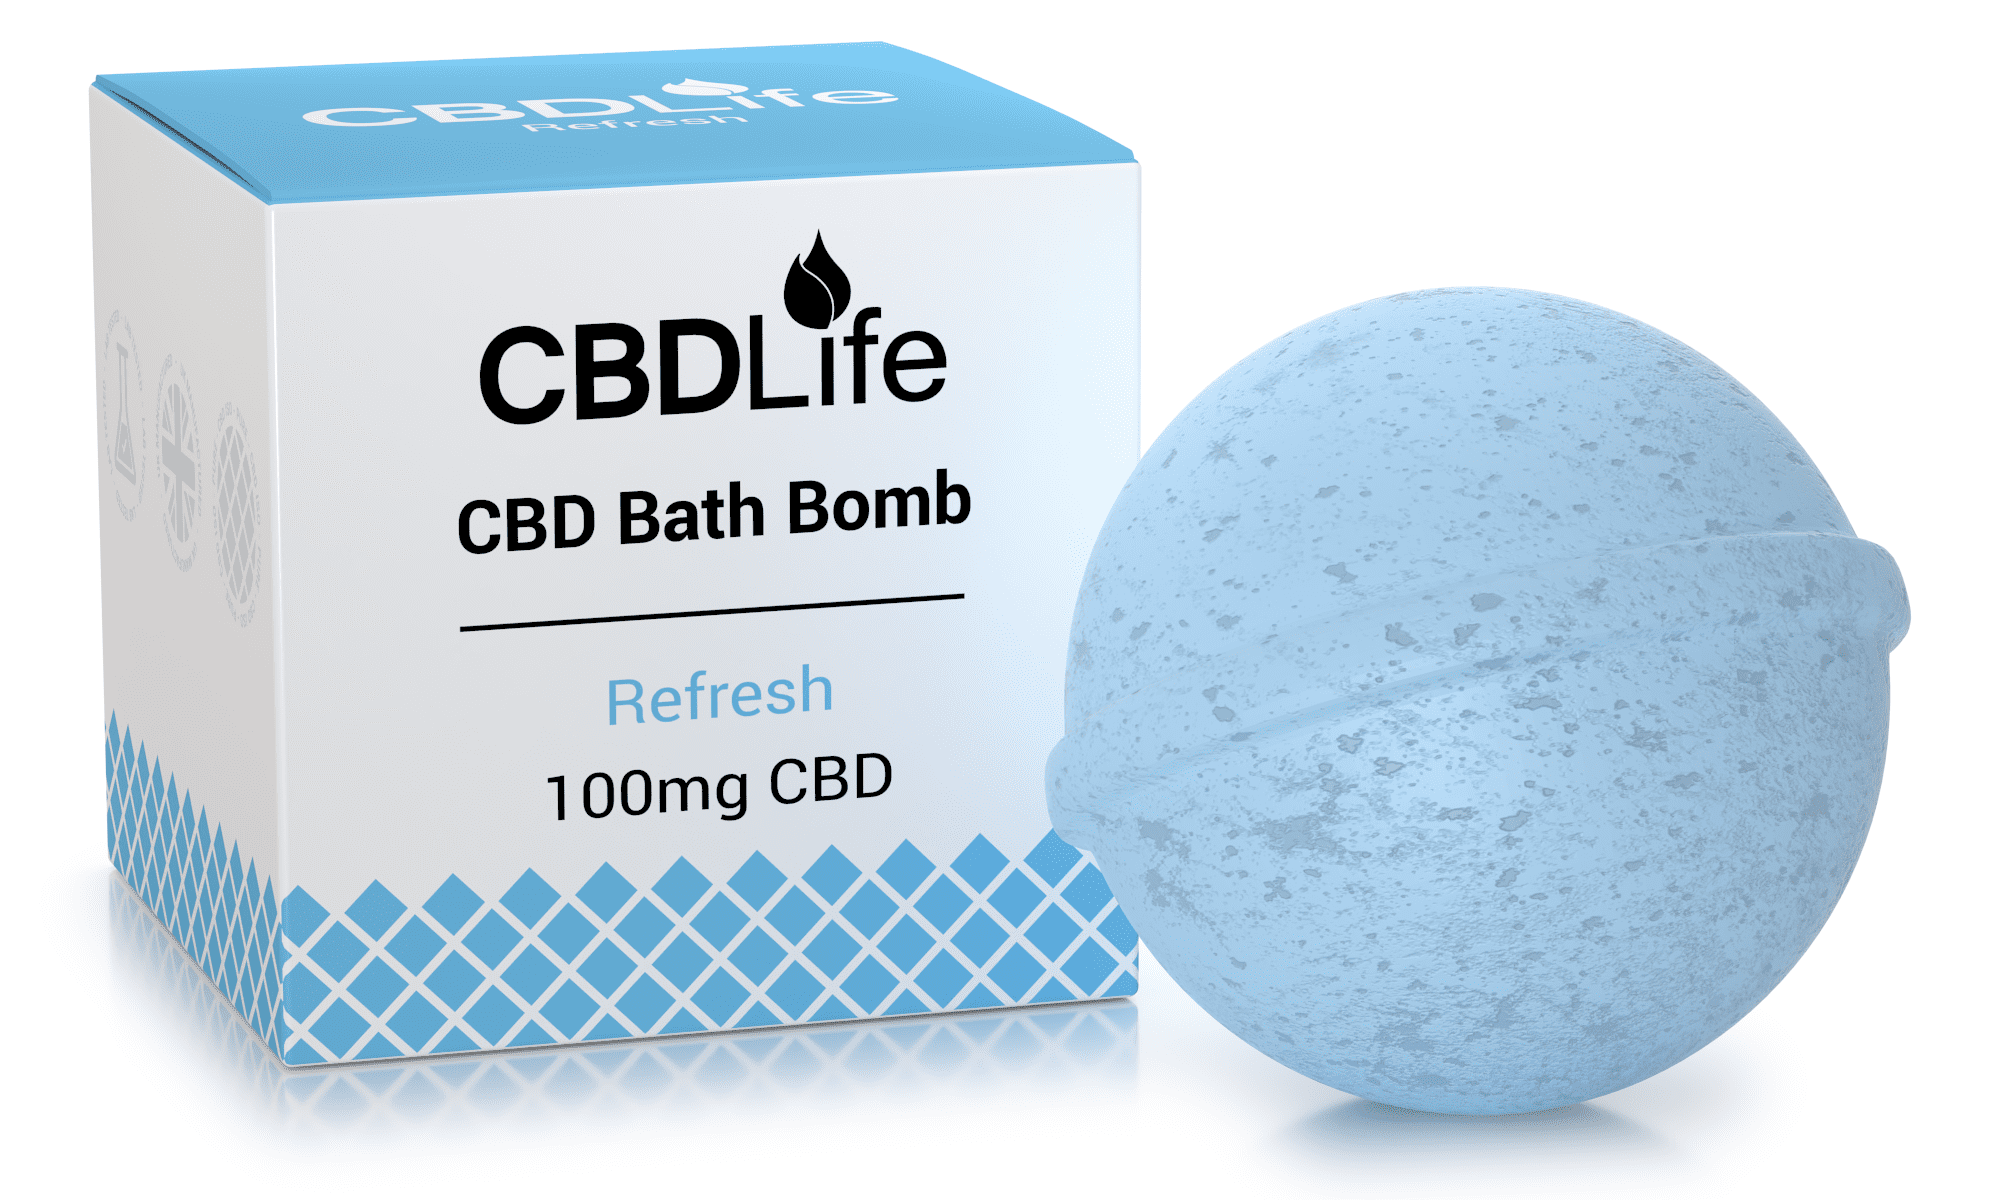 CBD Life Refresh bathbomb and box